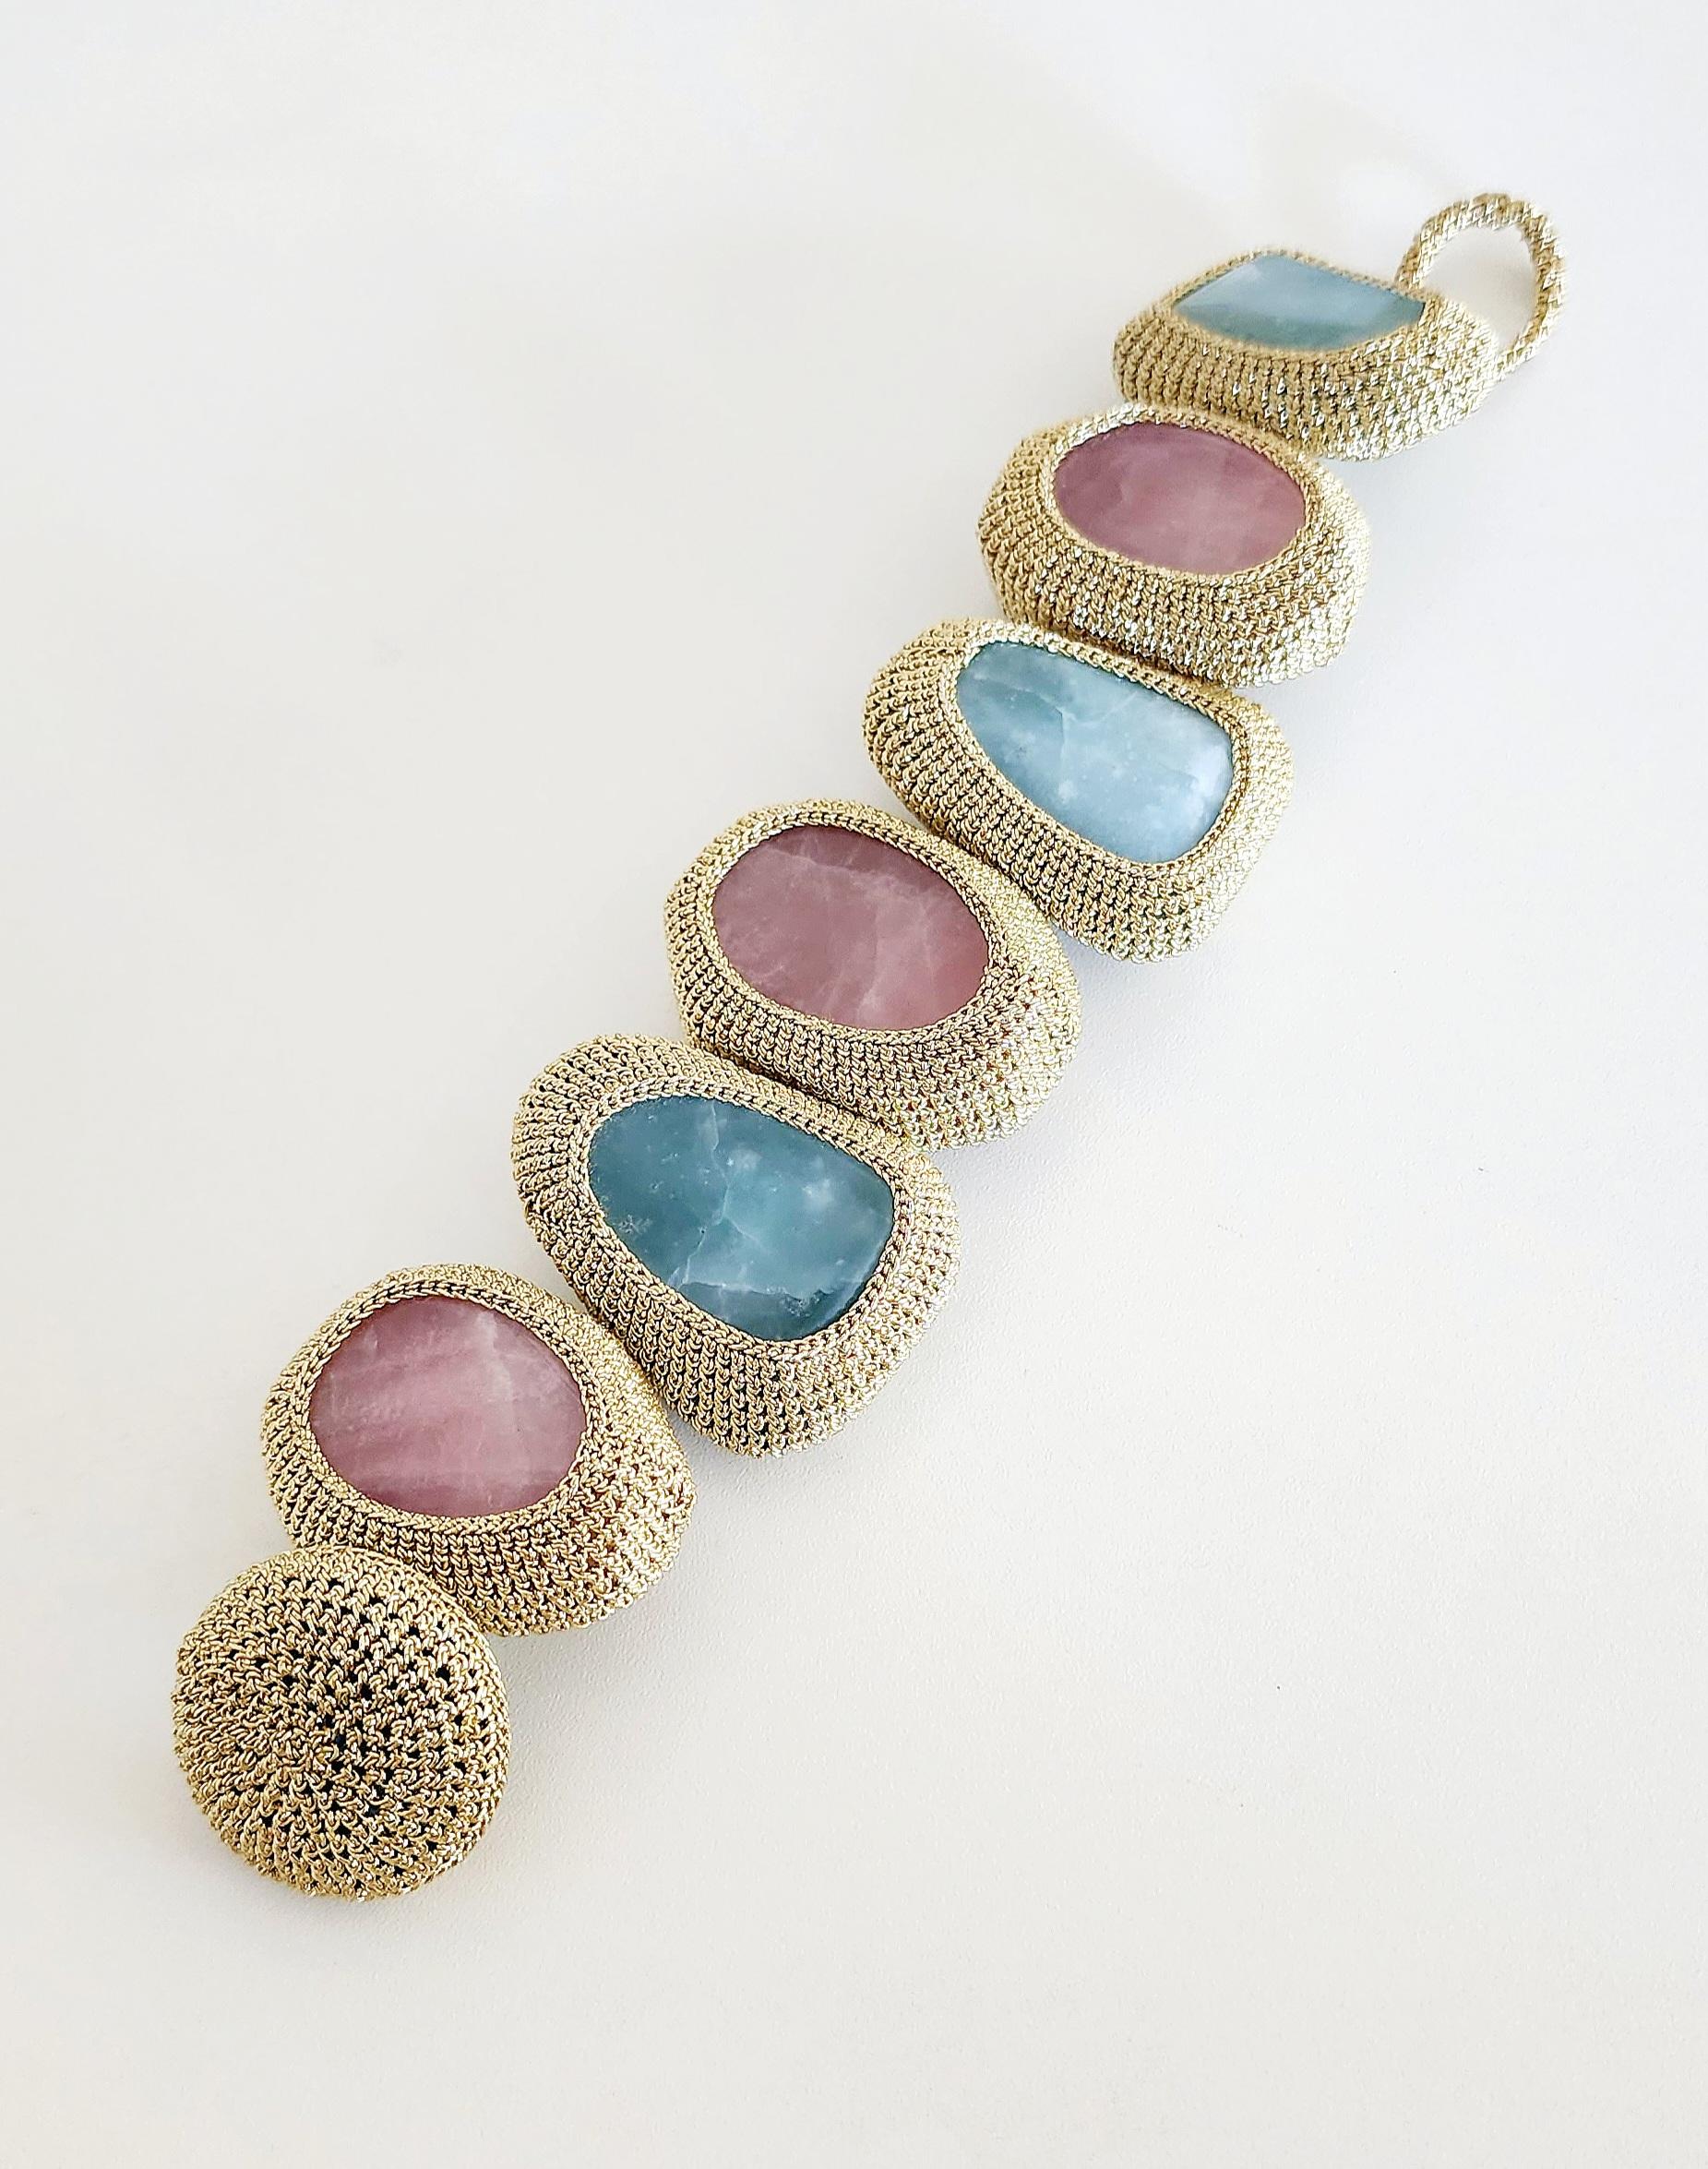 Mixed Cut Light Golden Thread Crochet Bracelet Amazonite Rose Quartz  For Sale